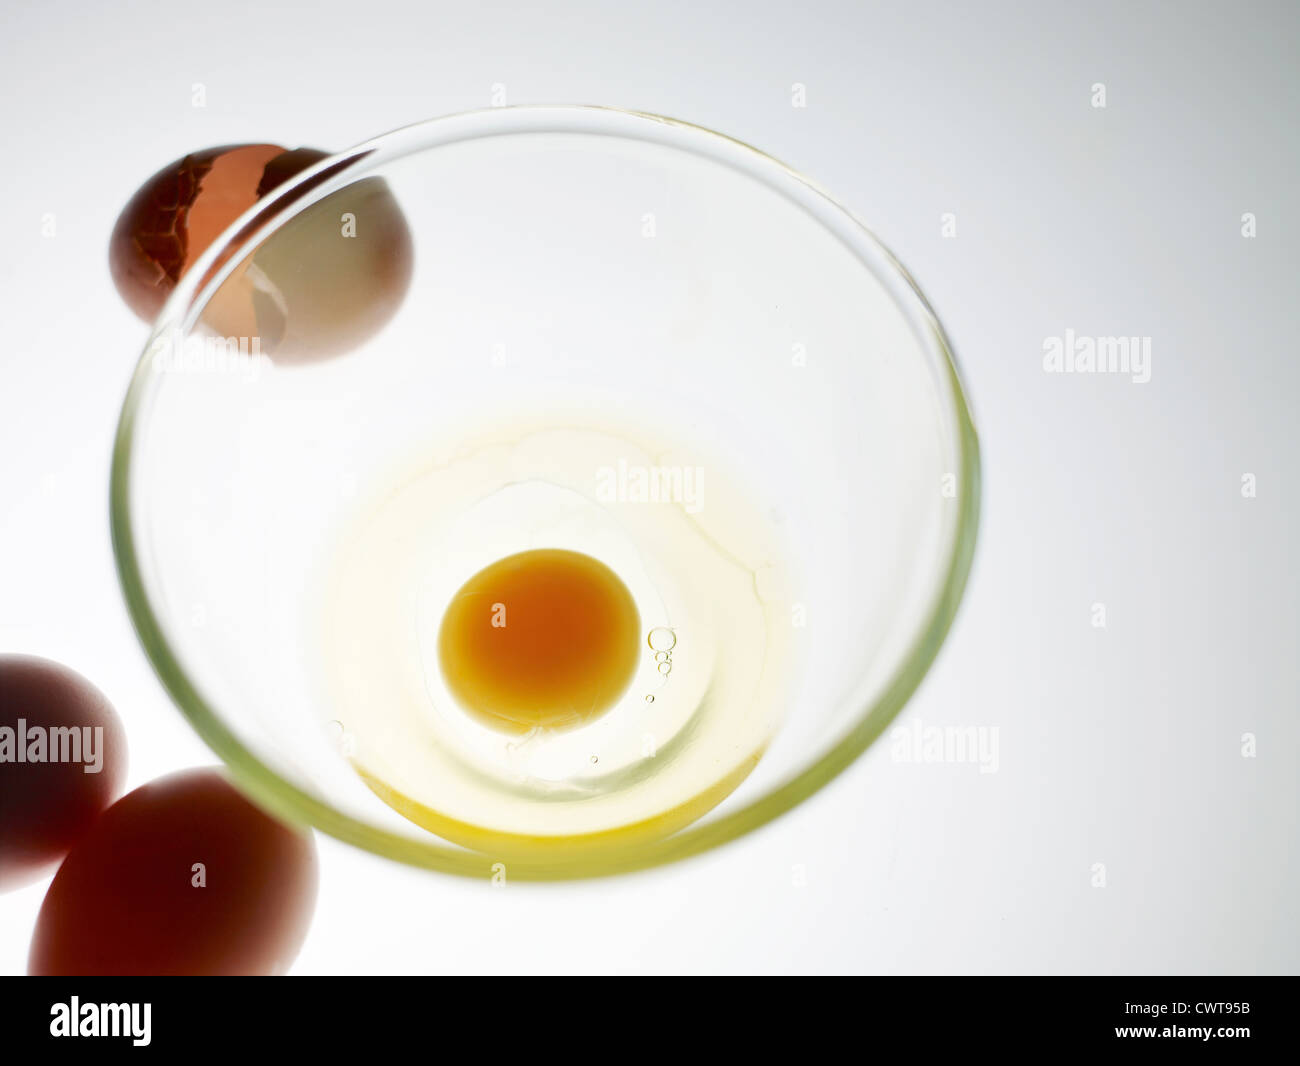 Broken egg in a mixing bowl Stock Photo